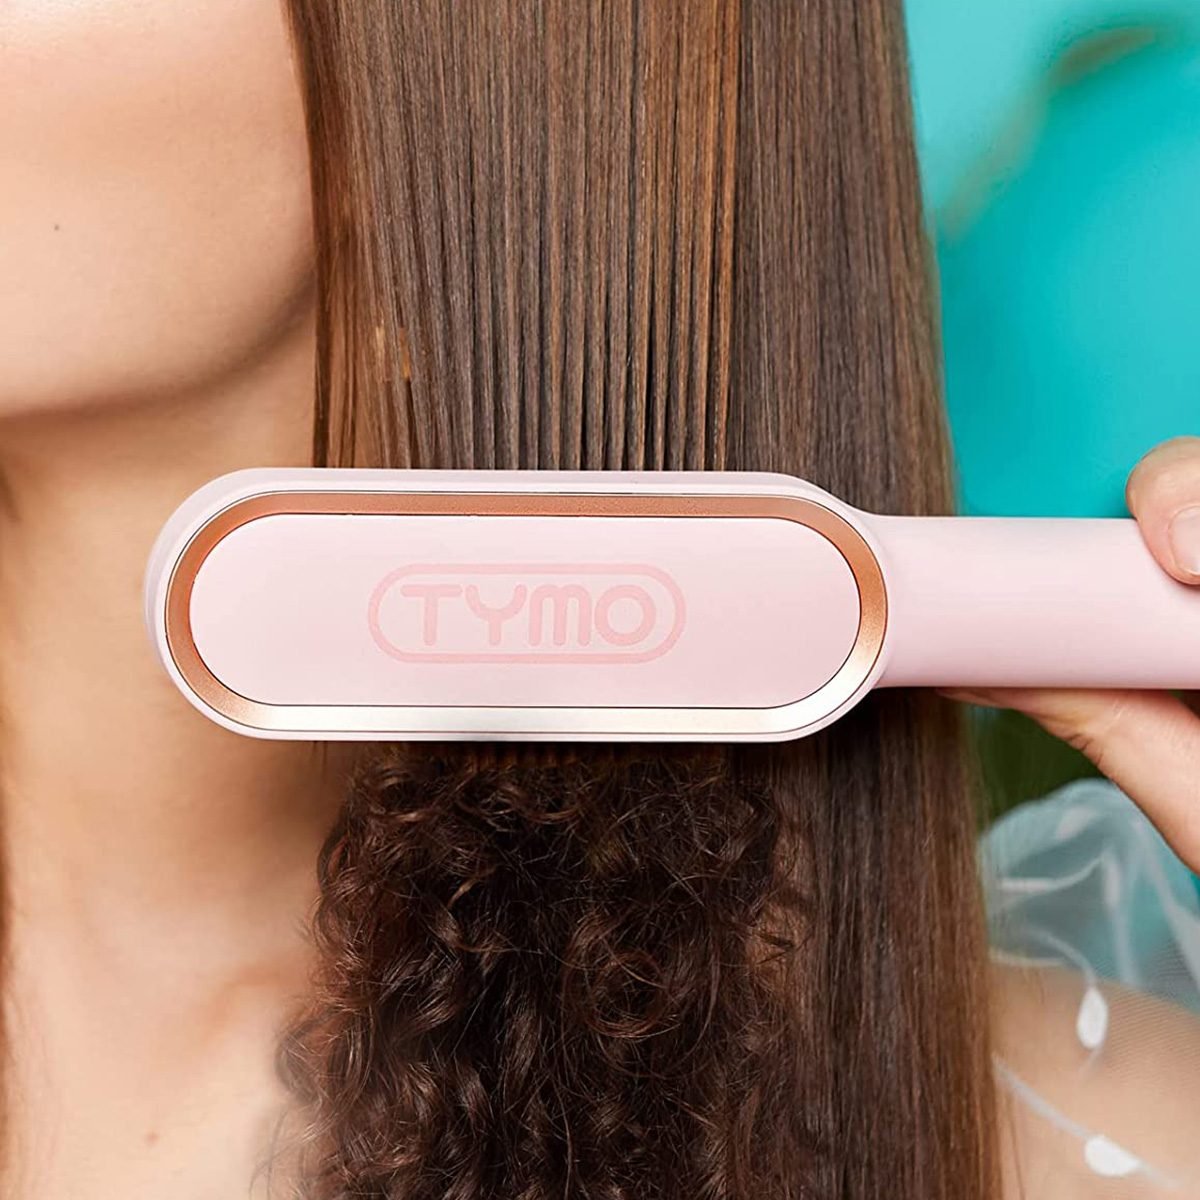 https://www.rd.com/wp-content/uploads/2022/01/tymo-hair-straightening-comb-lifestyle-via-amazon.com-ecomm.jpg